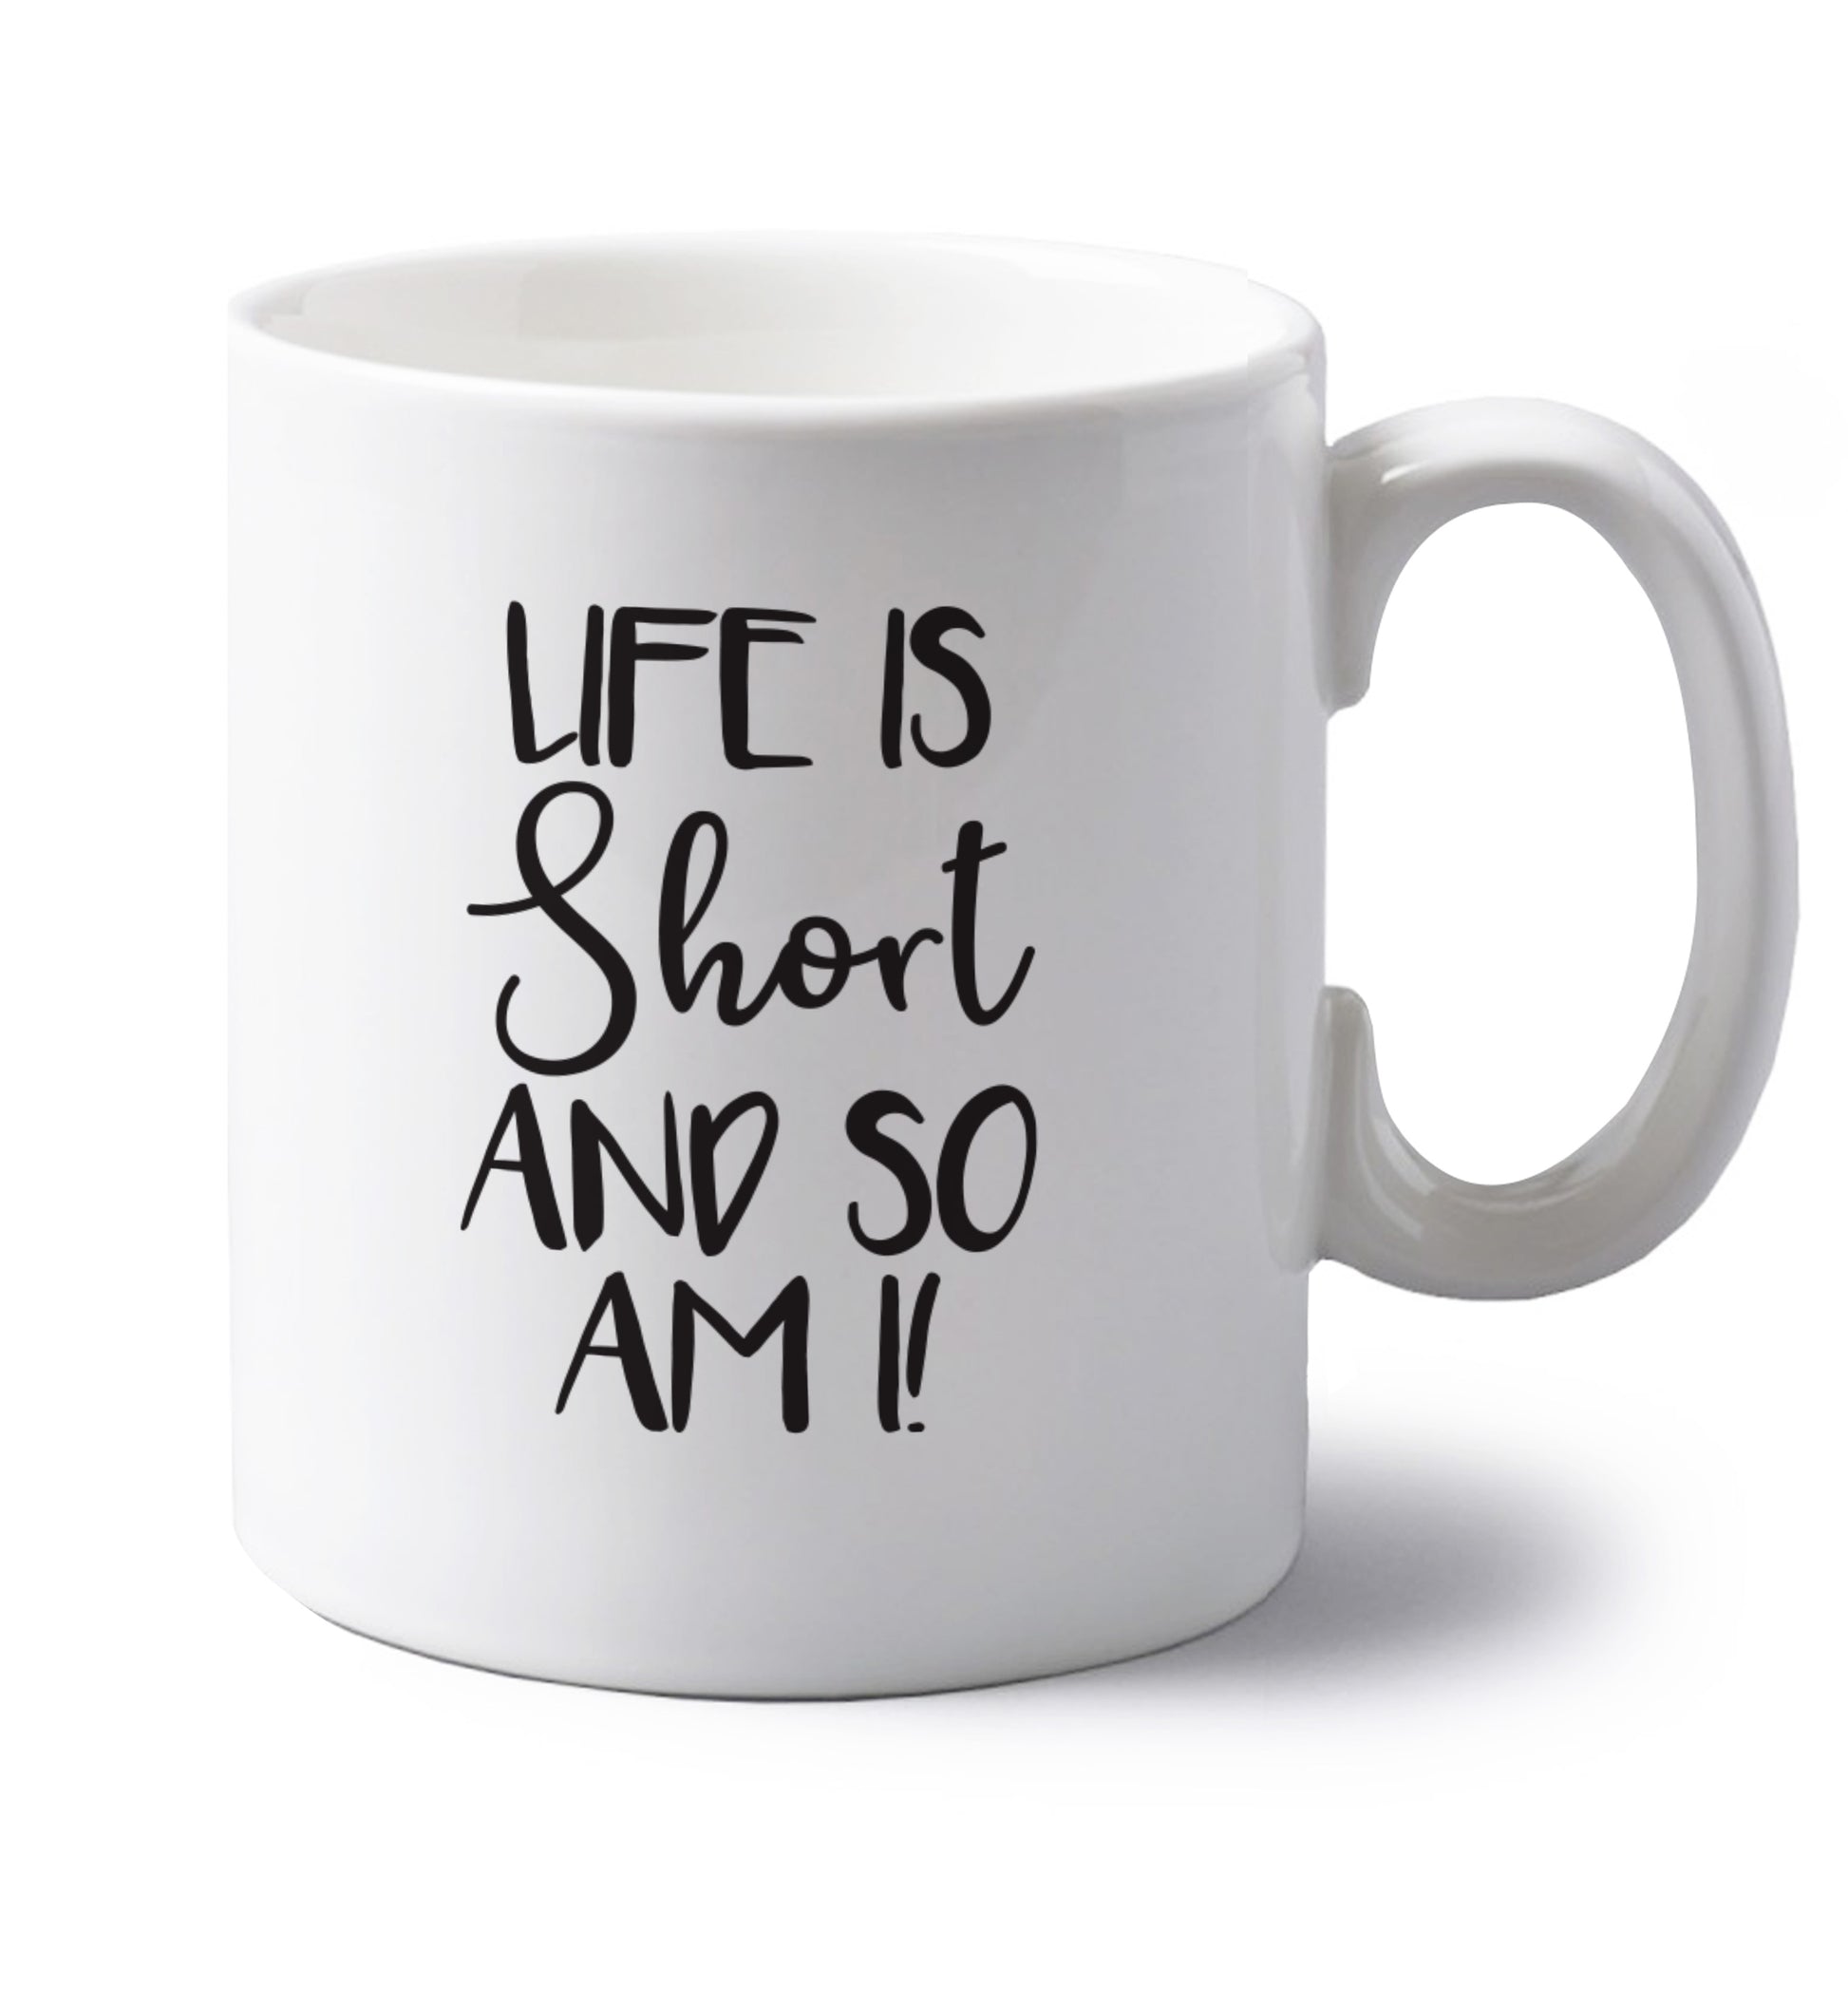 Life is short and so am I! left handed white ceramic mug 